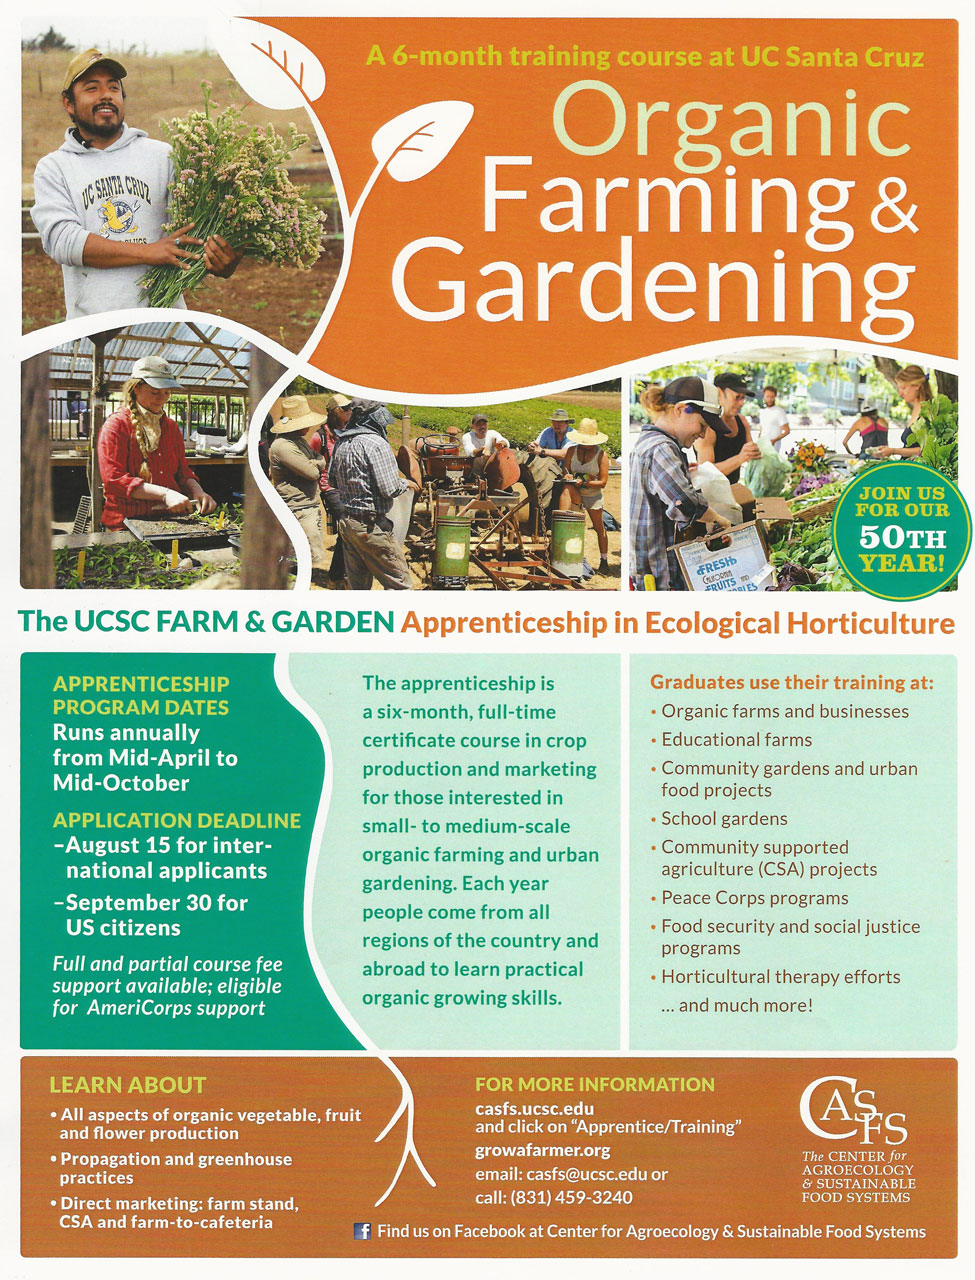 UCSC Farm & Garden Apprenticeship